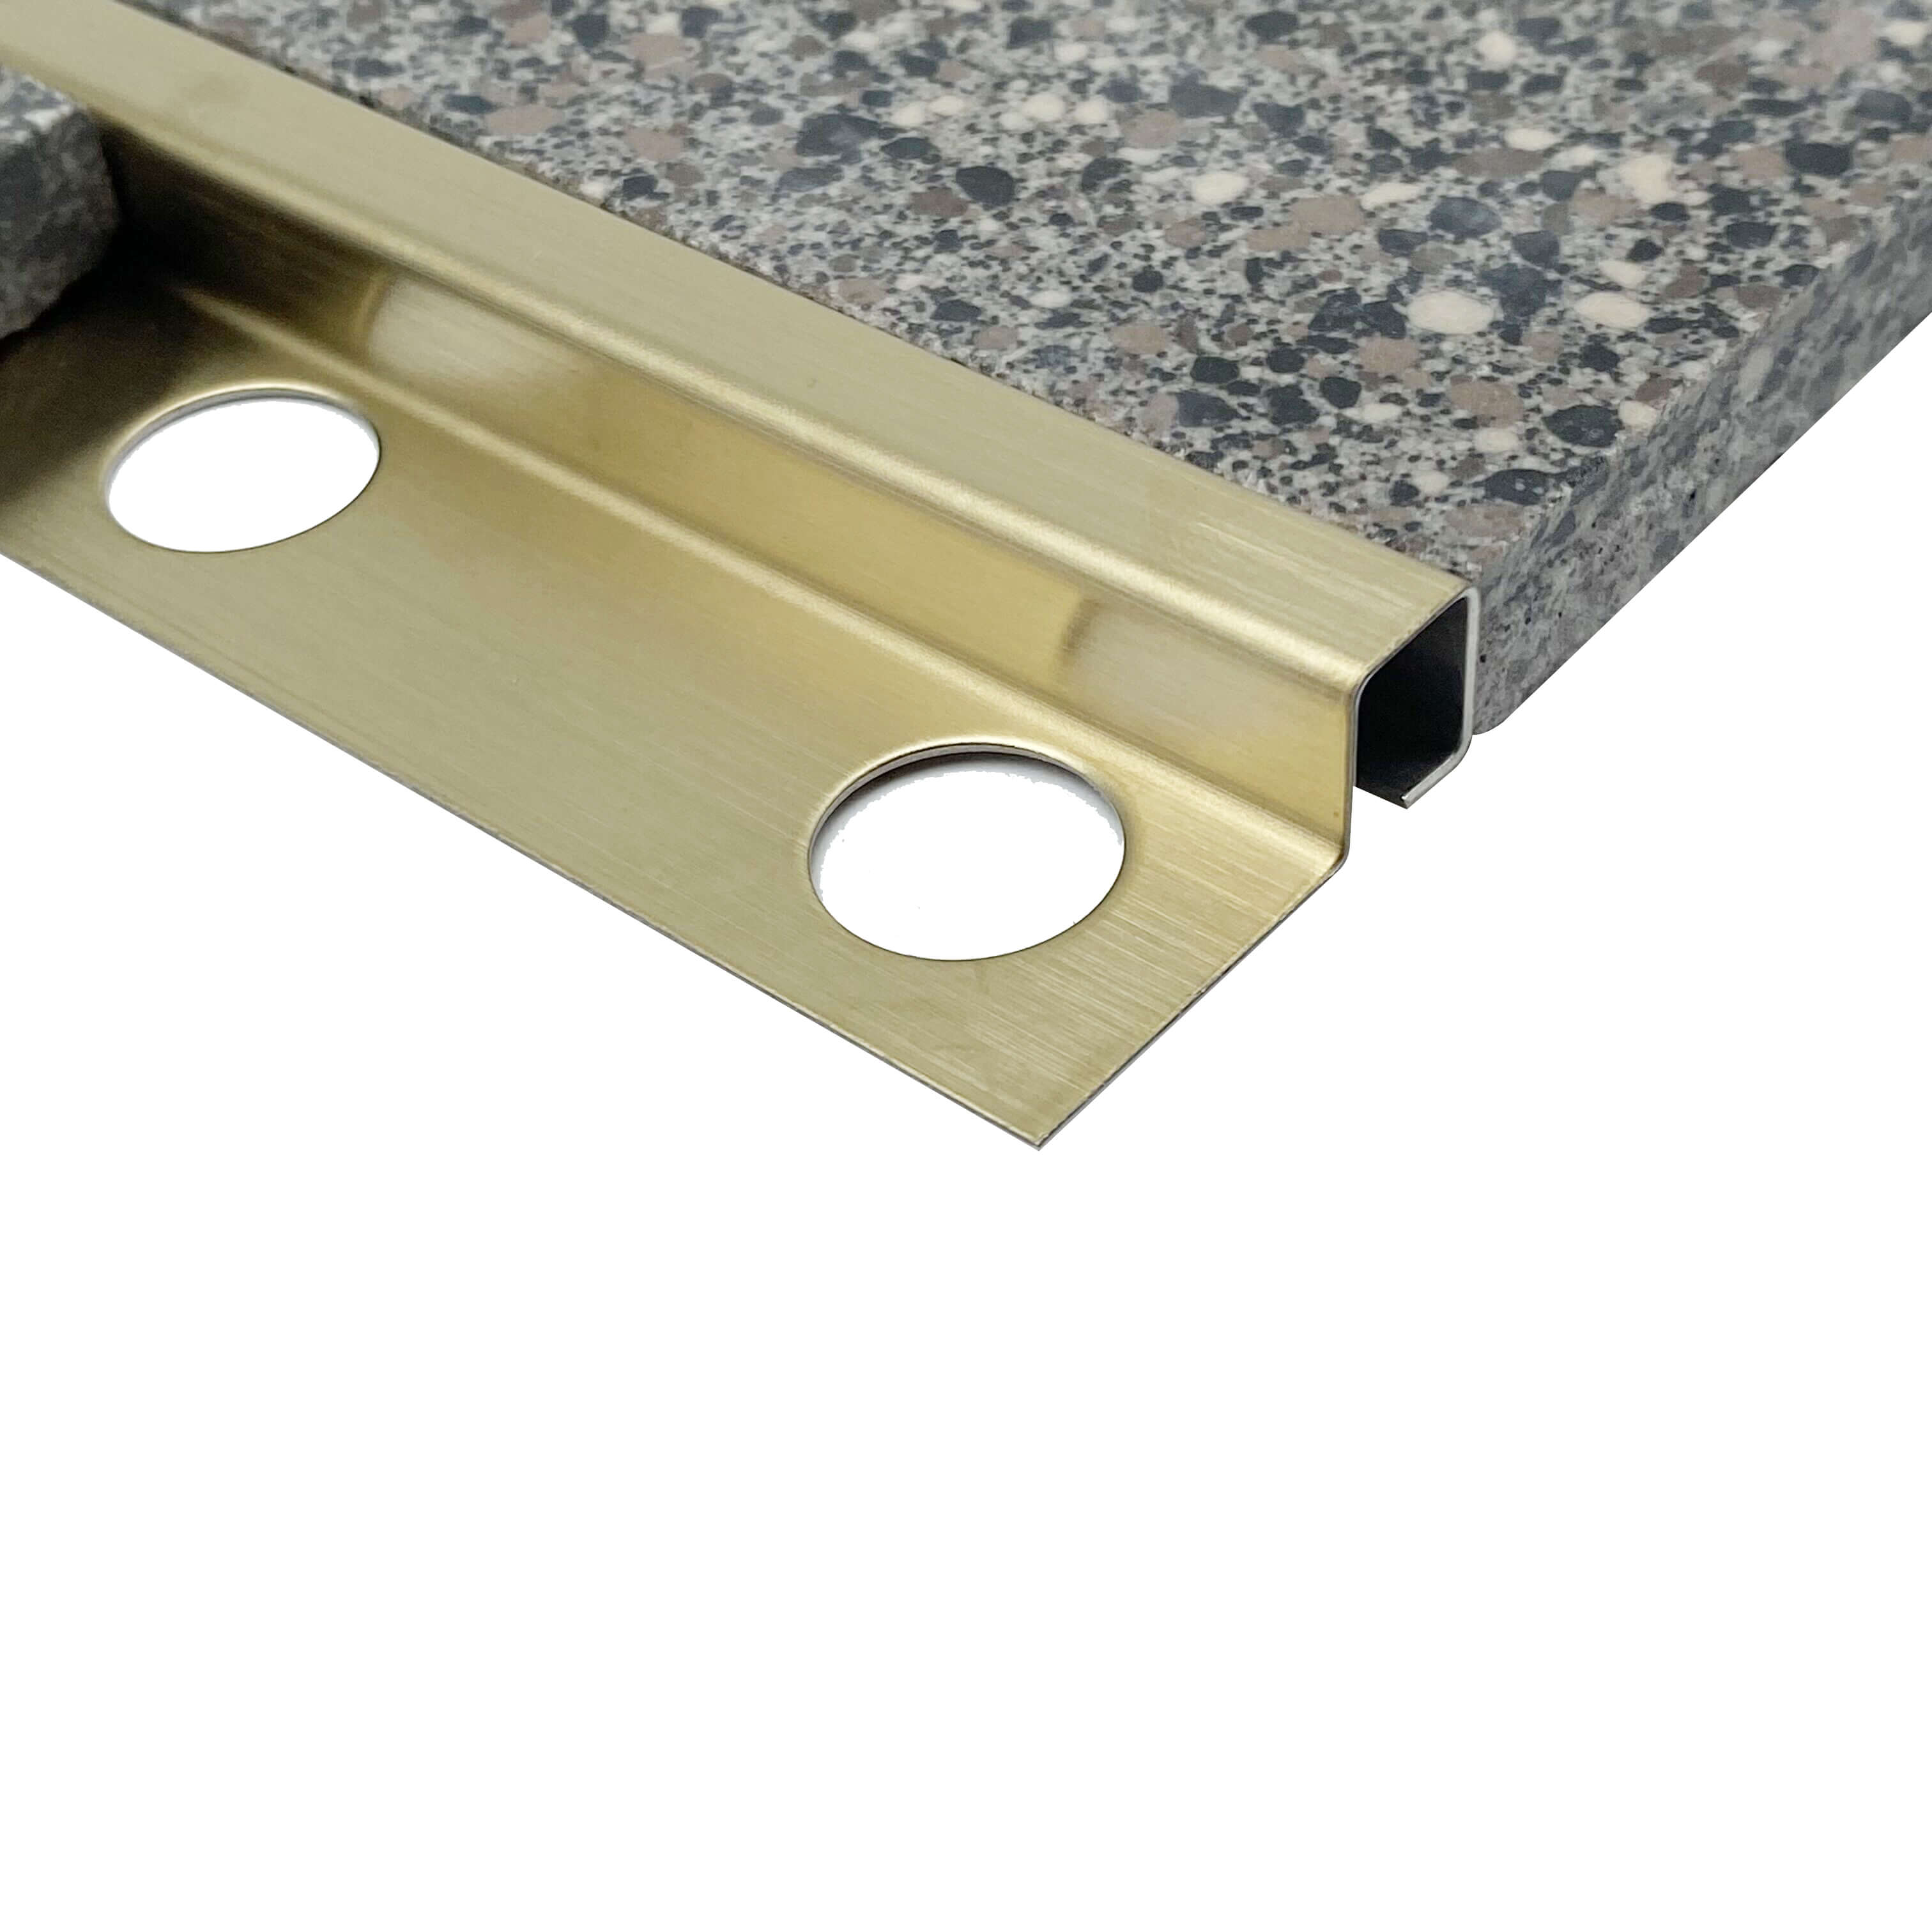 WF12x12x23GDBR-Square shape stainless steel tile trim gold brush